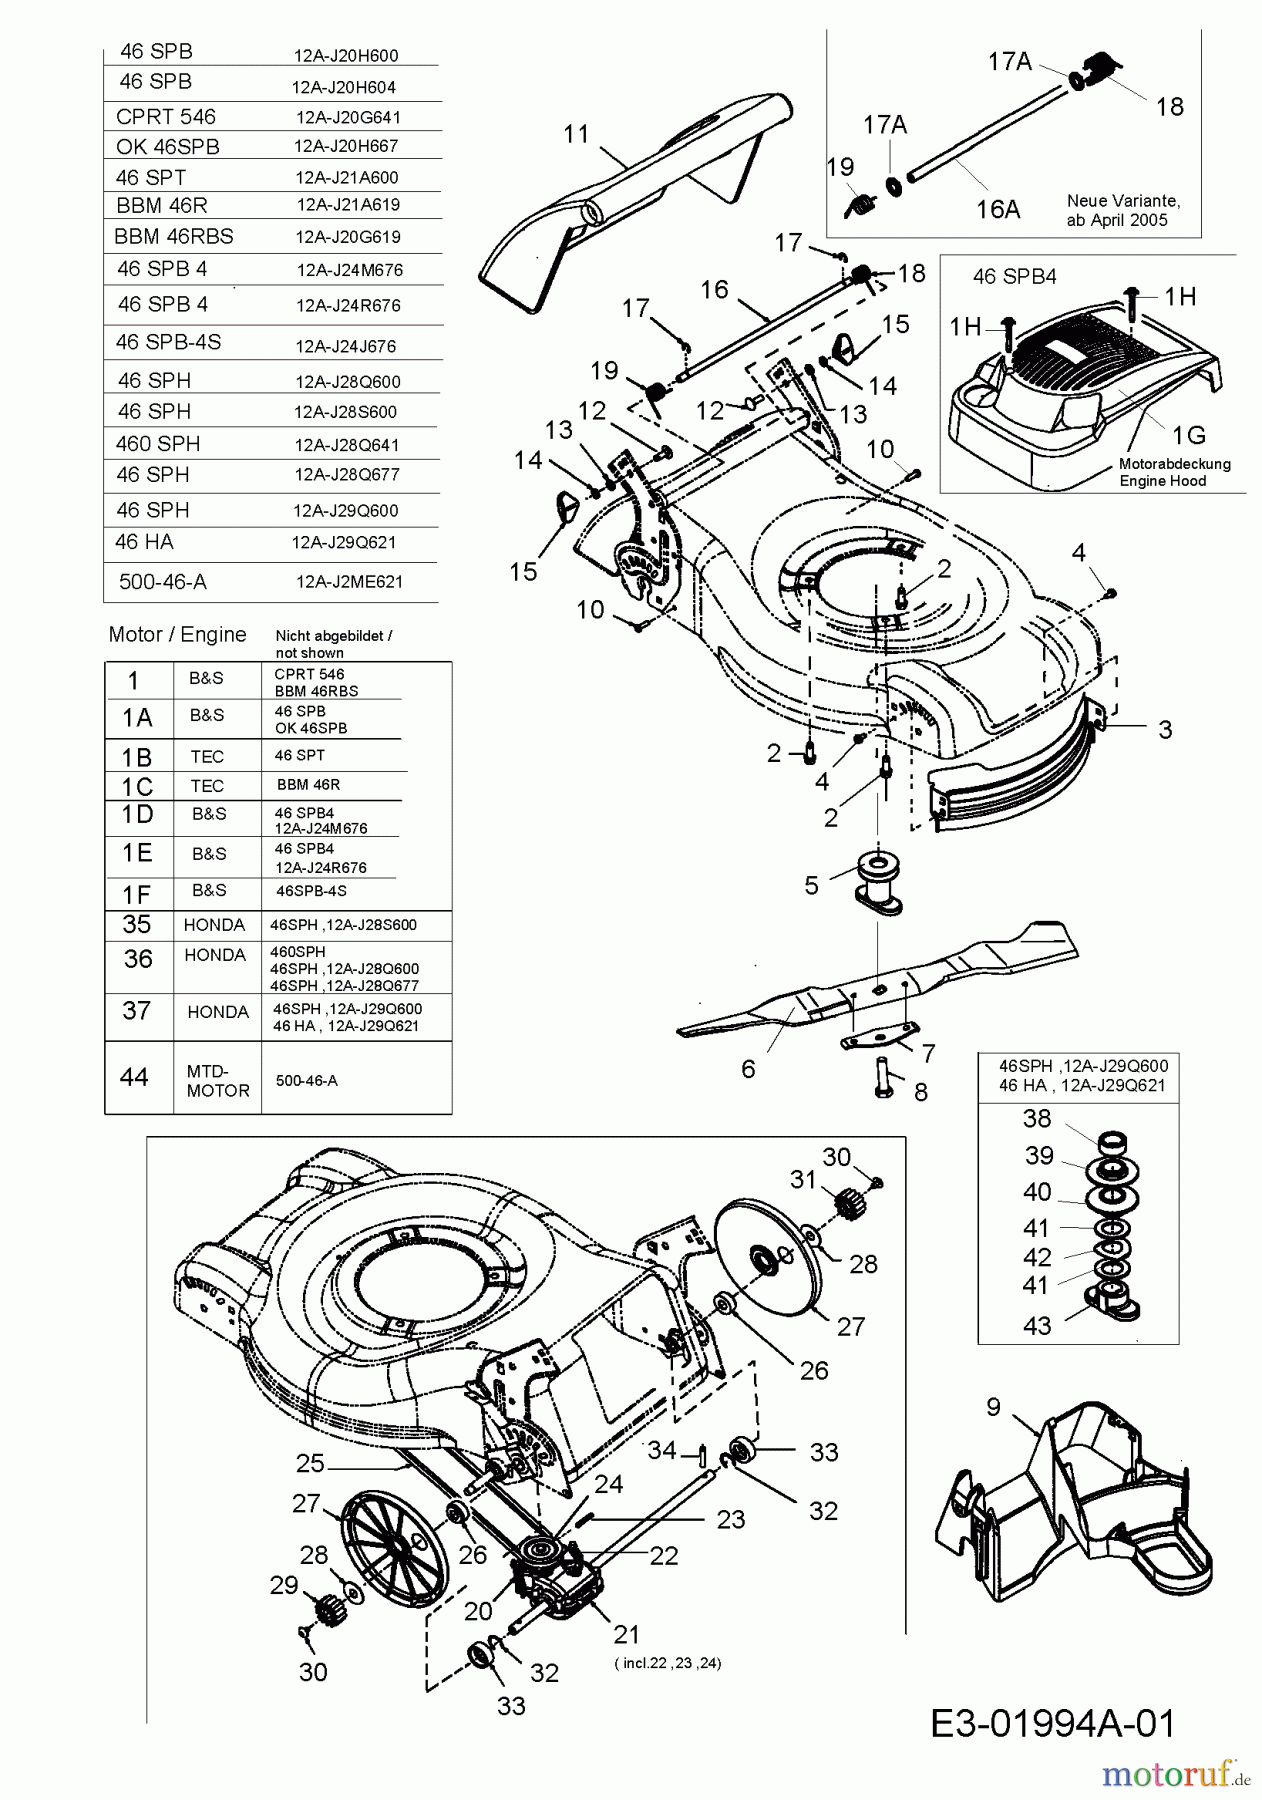  MTD Motormäher mit Antrieb 46 SPB-4 12A-J24M676  (2005) Getriebe, Messer, Motor